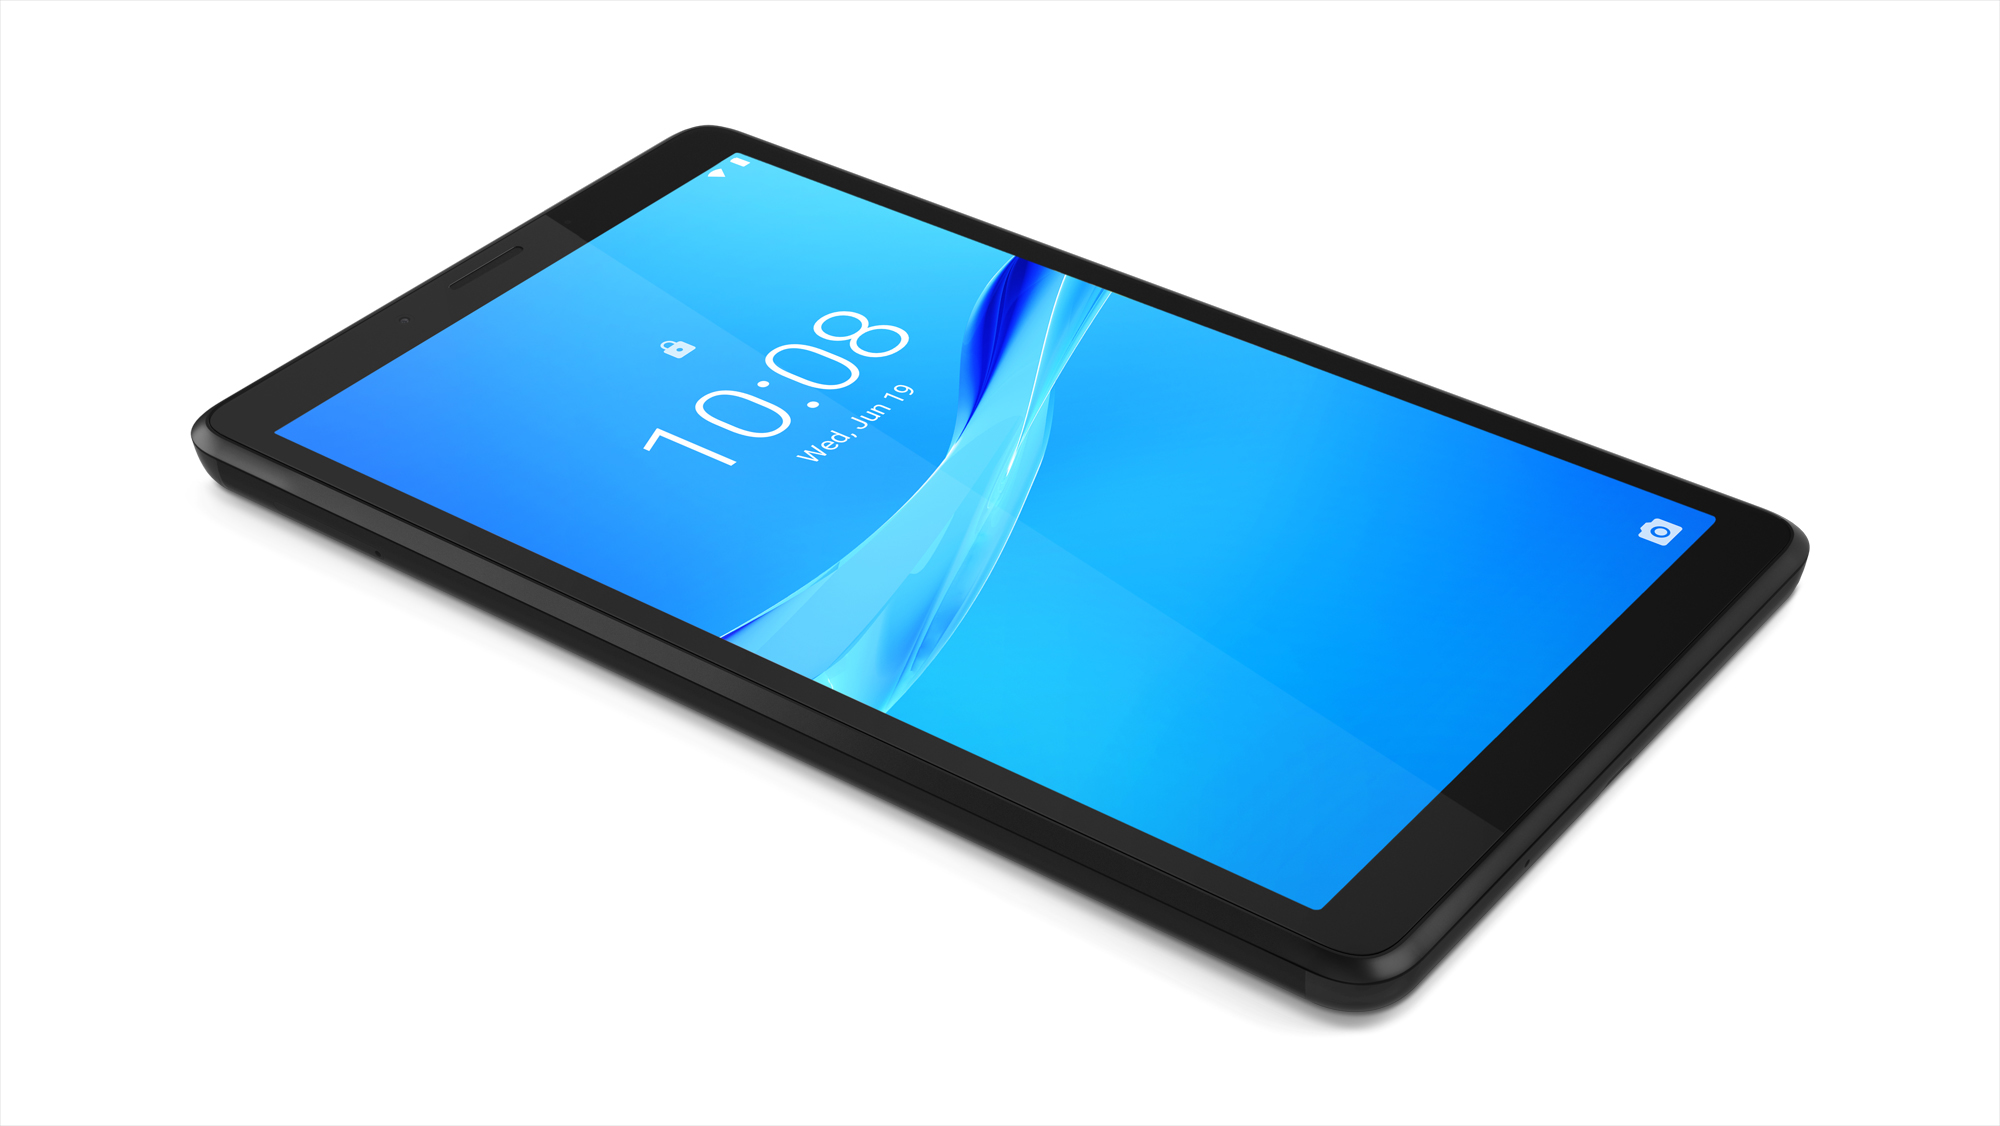 Lenovo Tab M7 7" Tablet, 16GB Storage, 1GB Memory, 1.3GHz Quad-Core Processor, Android 9 Pie Go Edition, HD Display - image 3 of 8